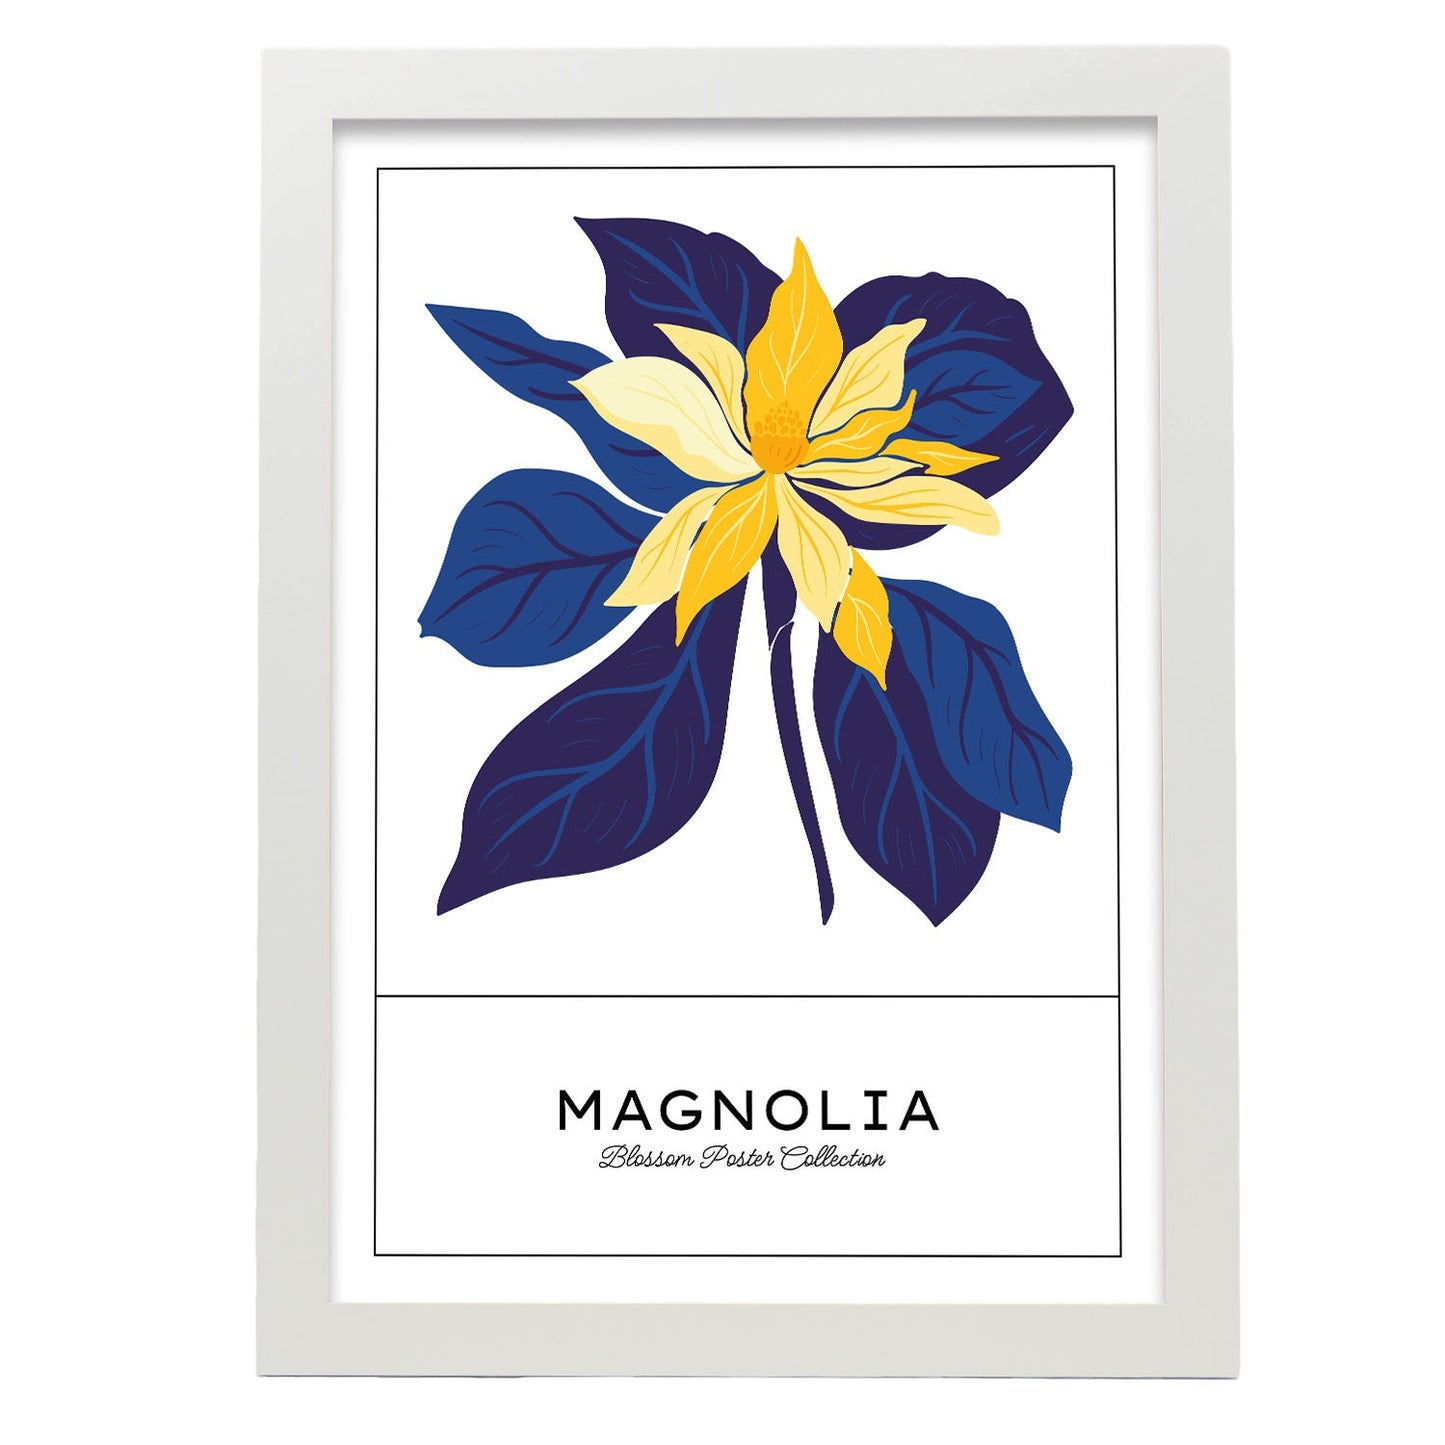 Magnolia Blue and Yellow-Artwork-Nacnic-A3-Marco Blanco-Nacnic Estudio SL